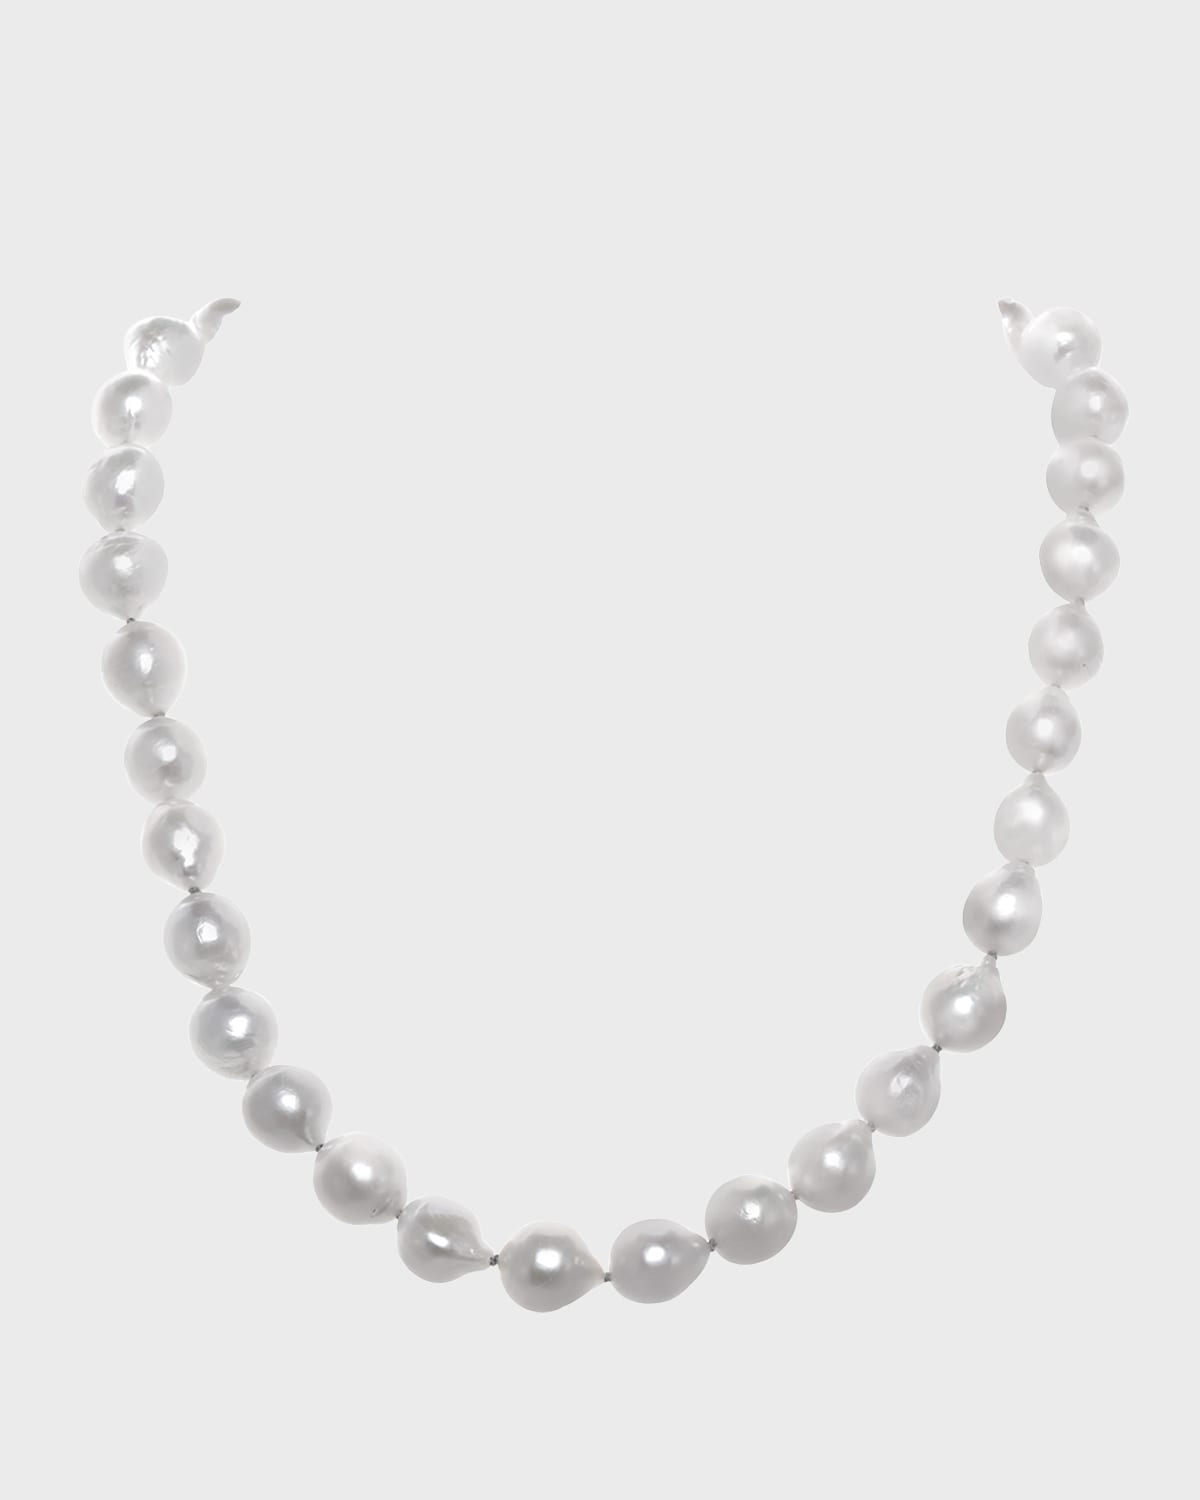 Margo Morrison Small White Baroque Pearl Necklace, 10-12mm, 18"l